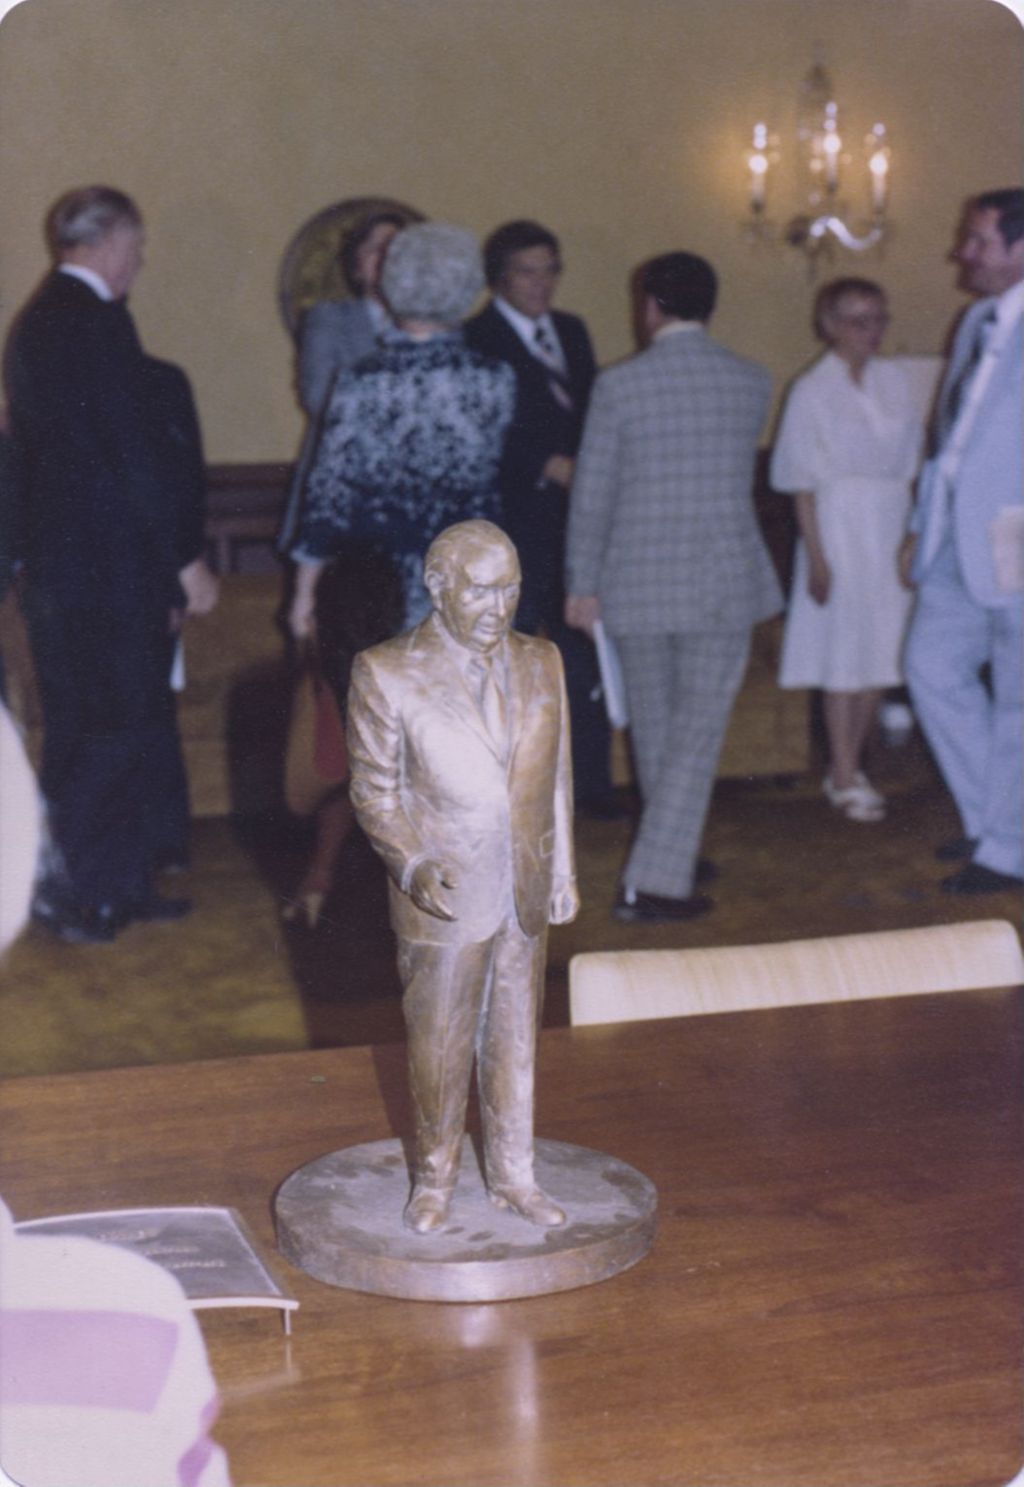 Miniature of Miniature copy of the Richard J. Daley statue